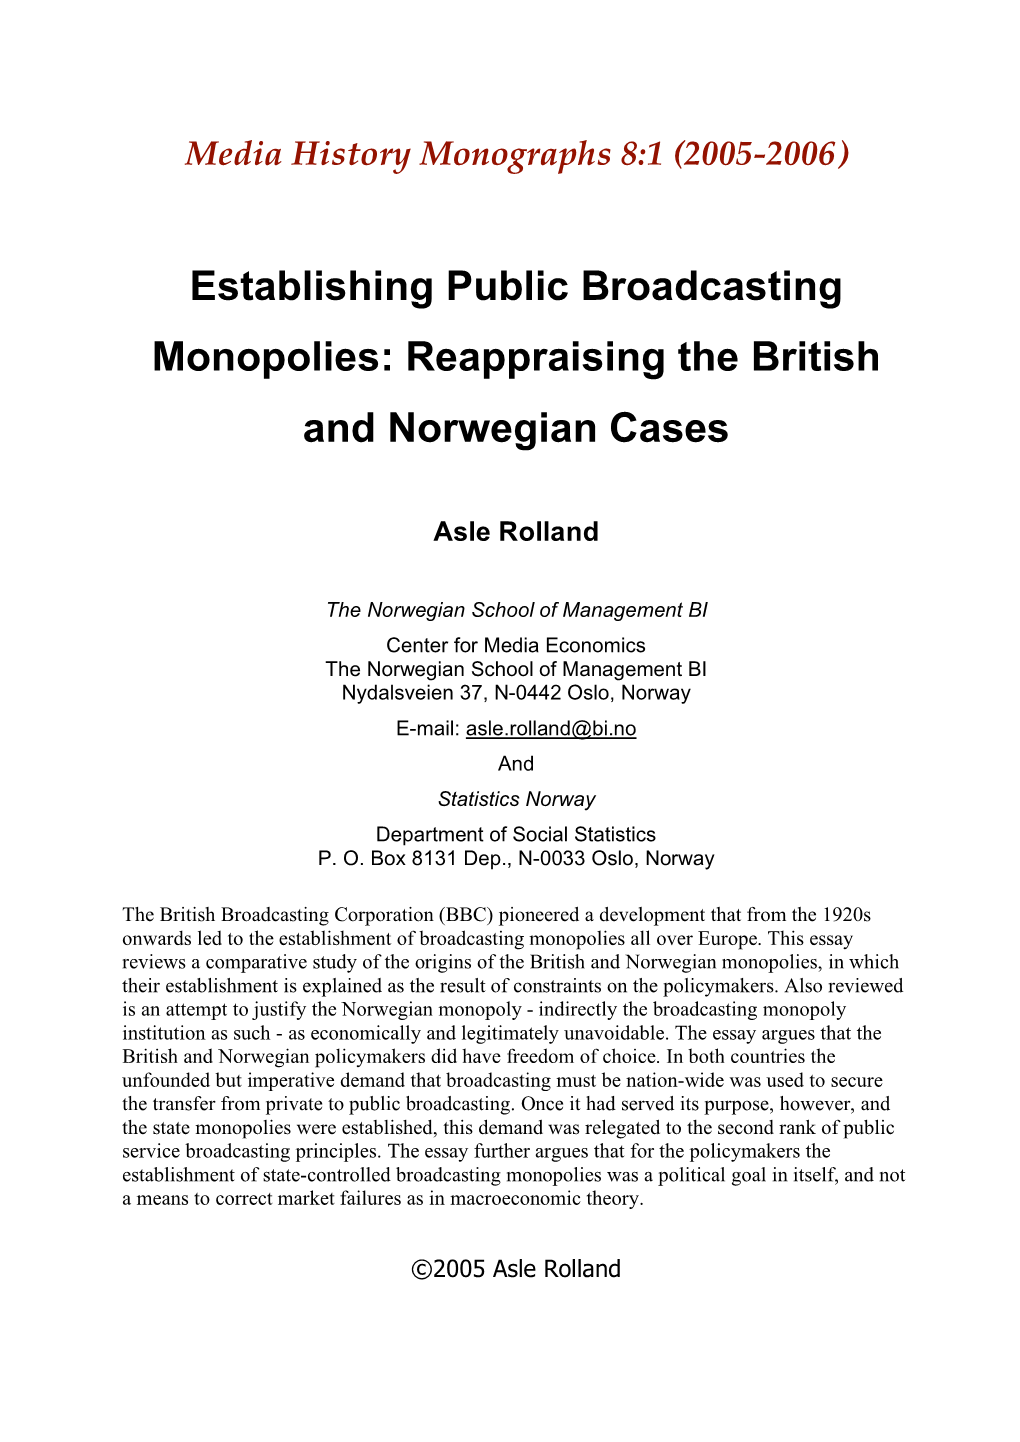 Establishing Public Broadcasting Monopolies: Reappraising the British and Norwegian Cases